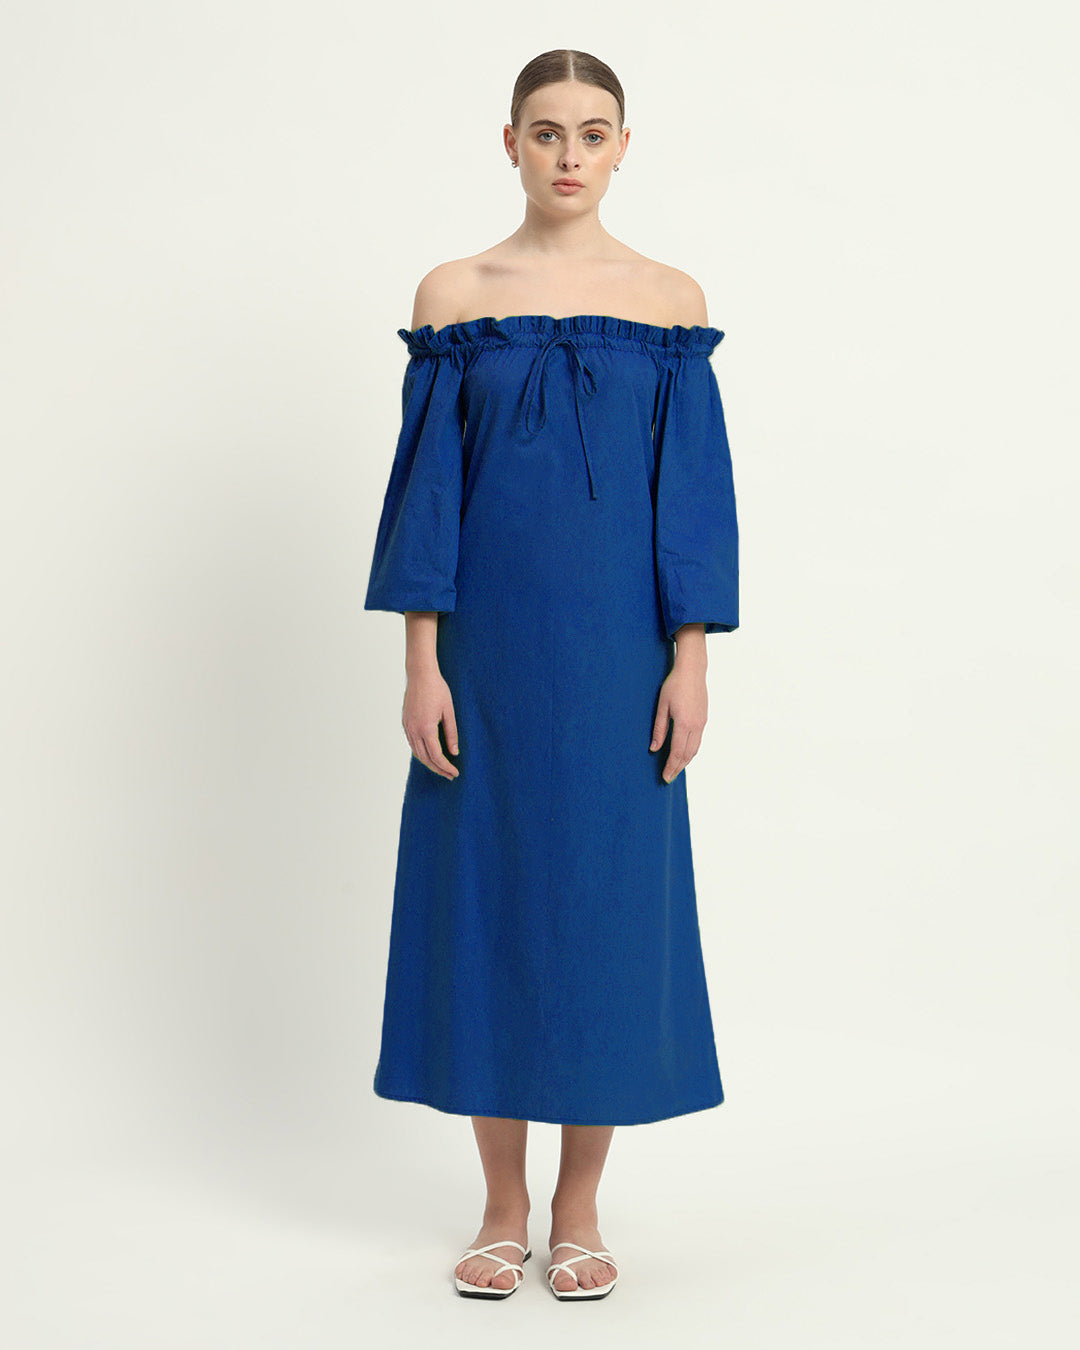 The Cobalt Carlisle Cotton Dress